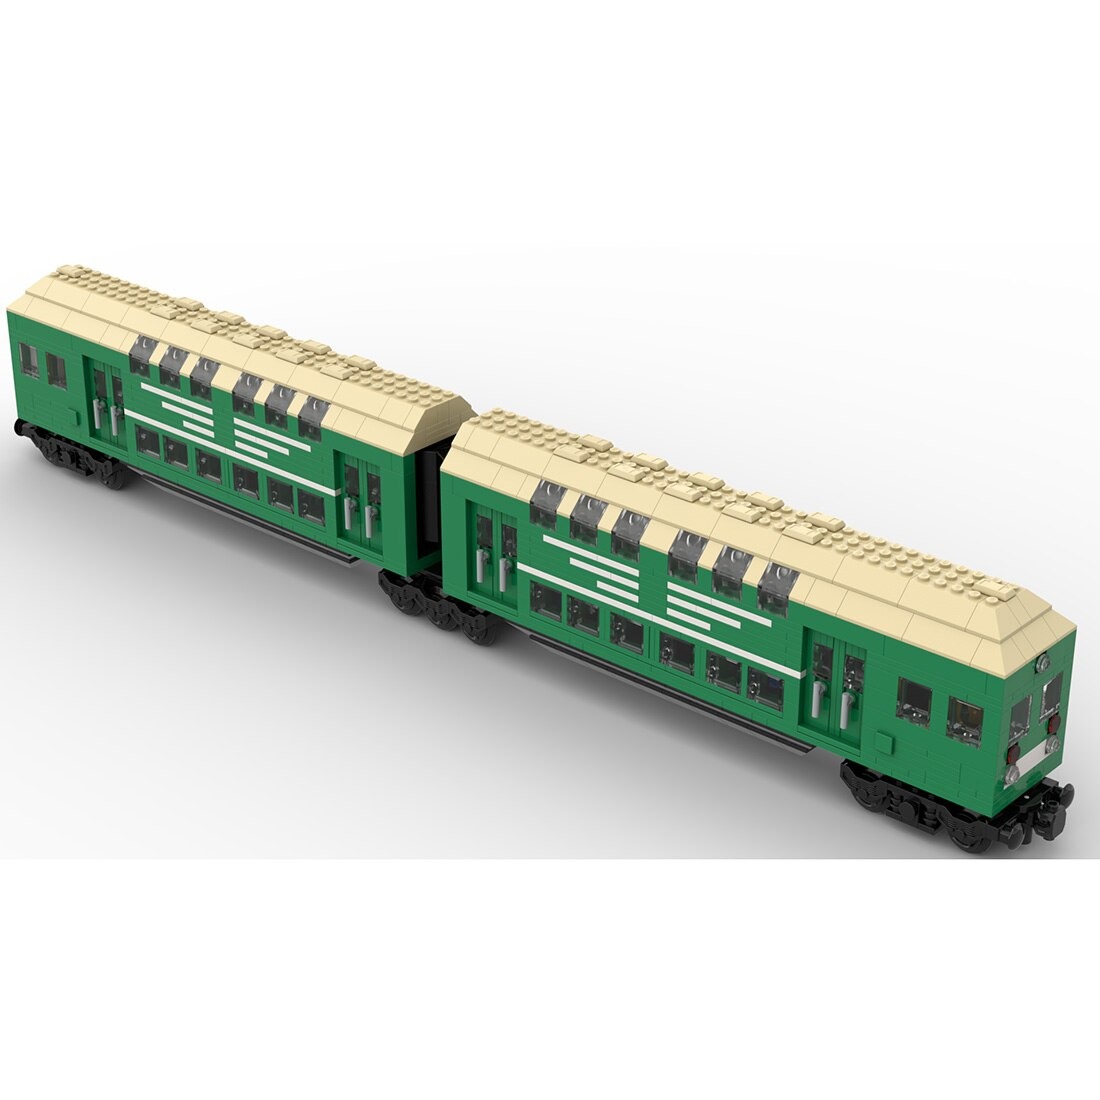 authorized moc 109281 7 axle train carri main 4 1 - KAZI Block